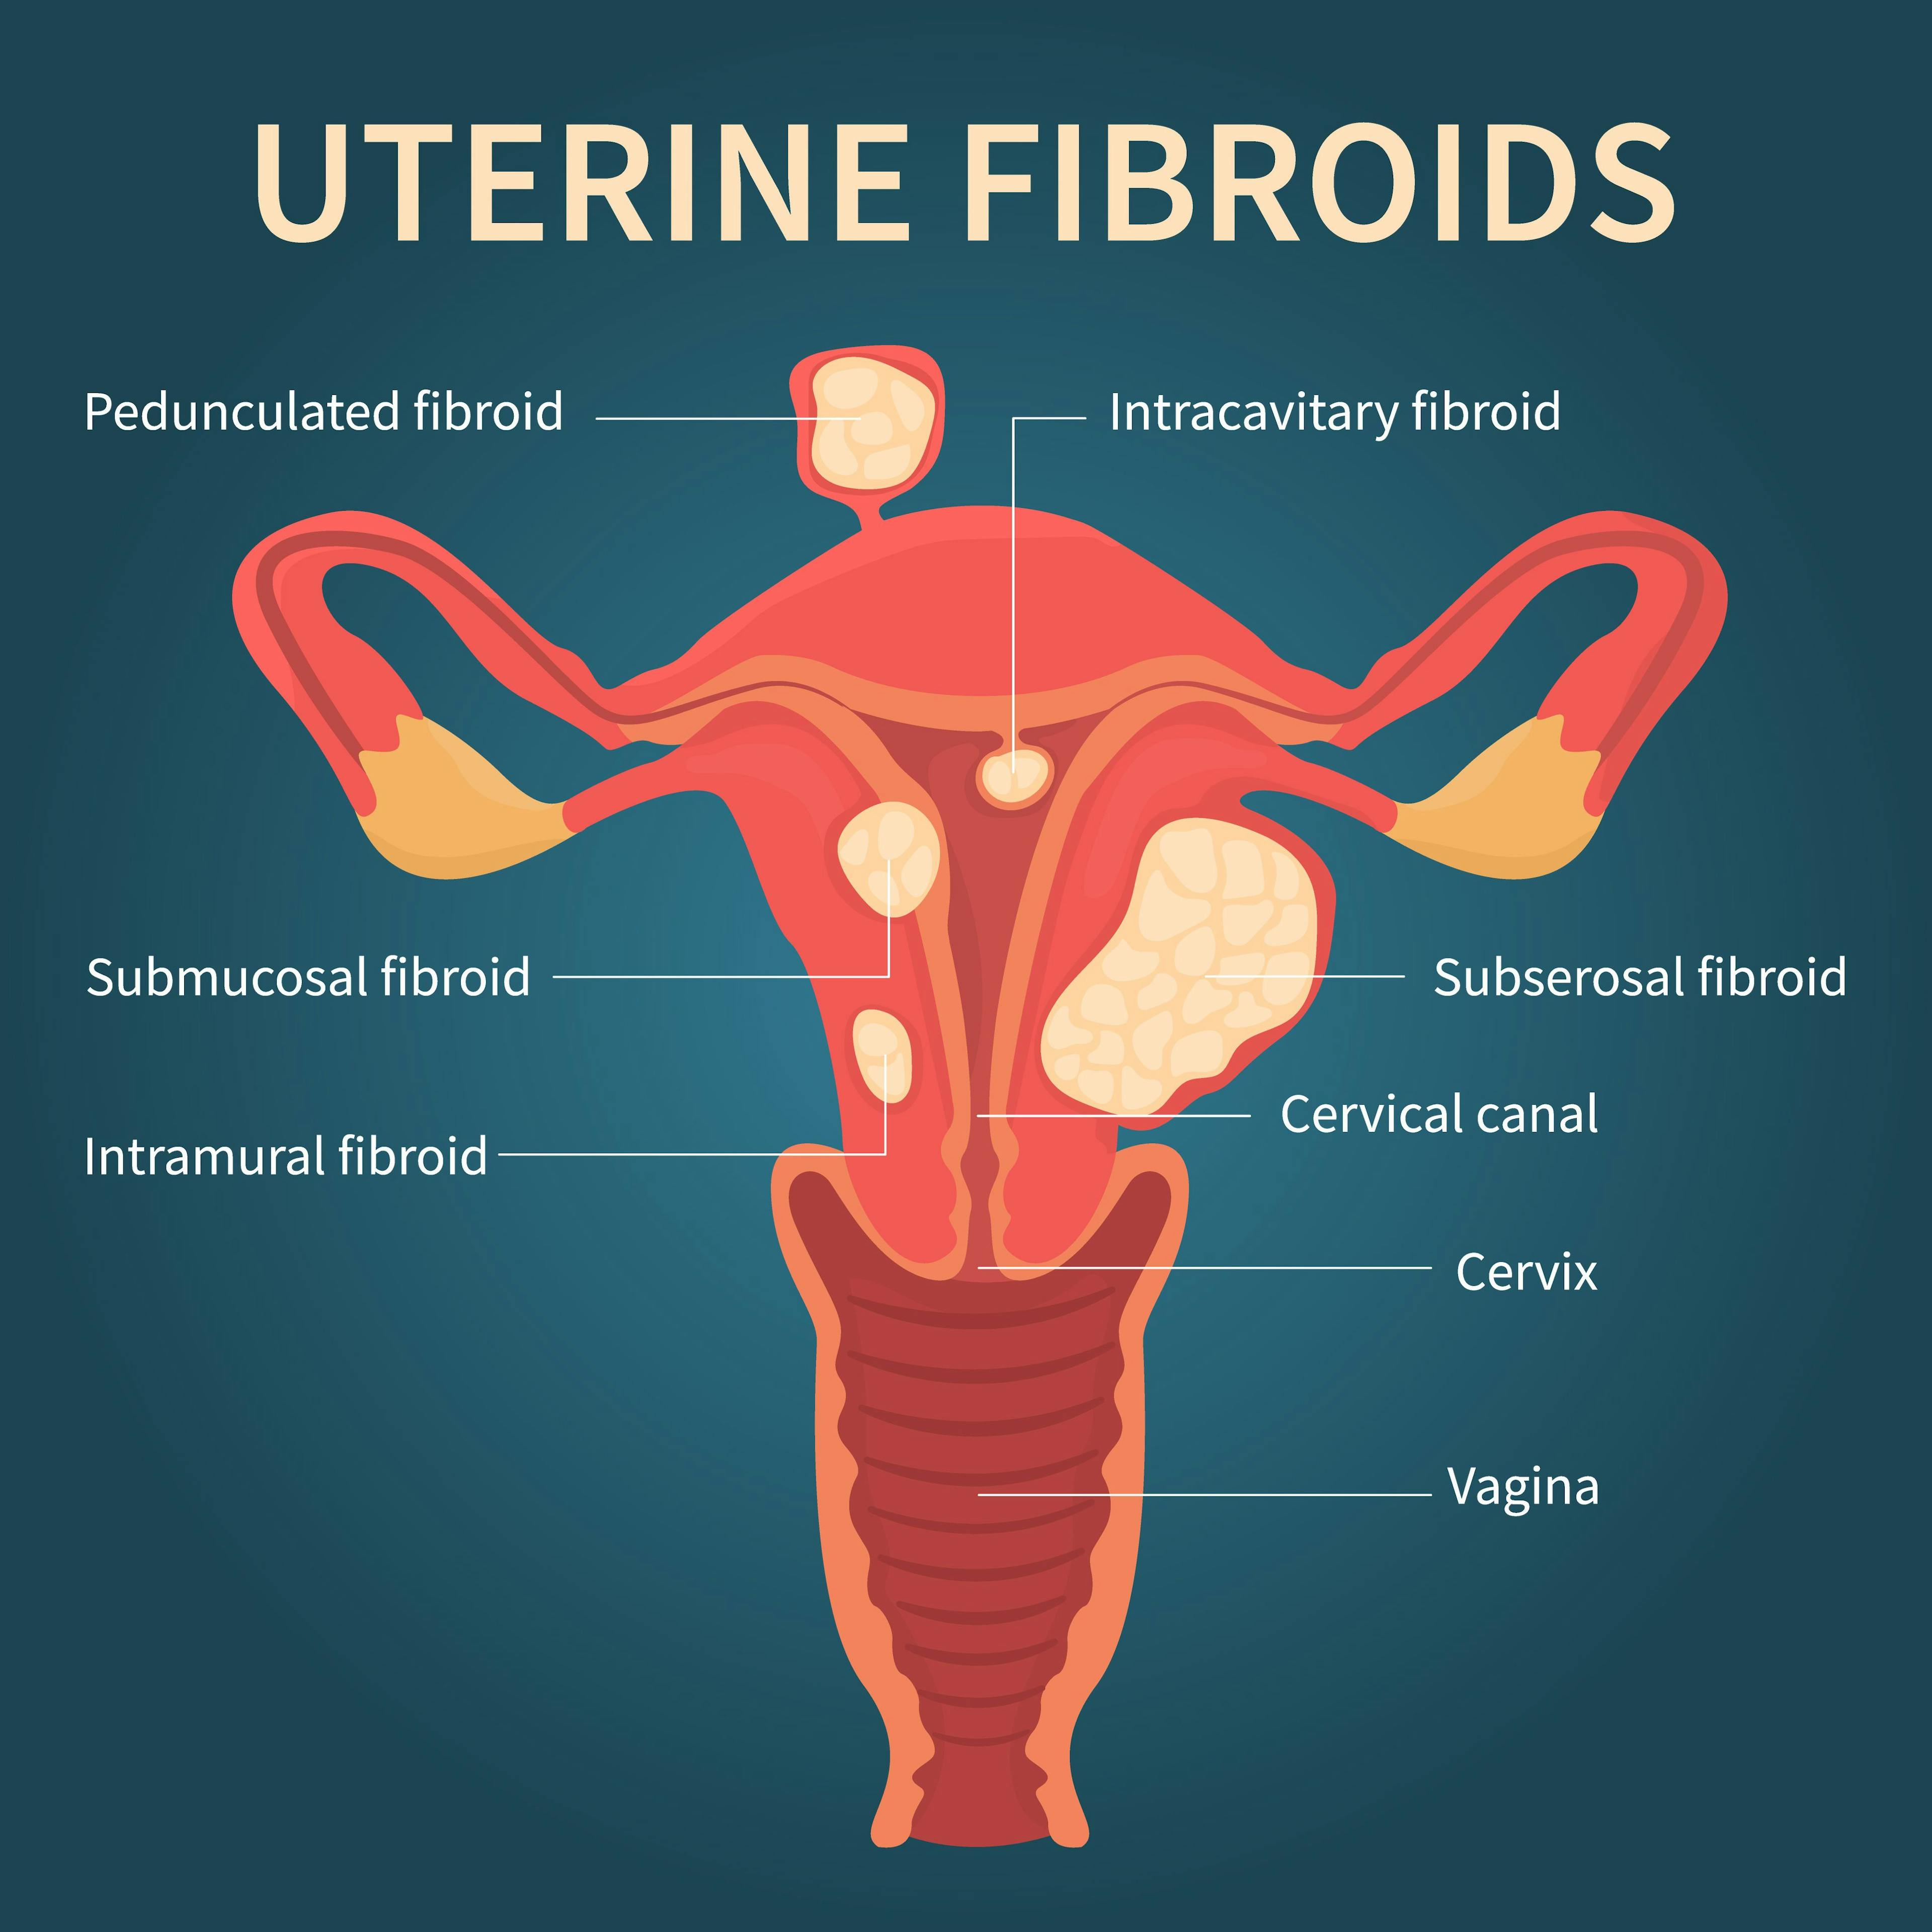 Uterine artery embolization or myomectomy for uterine fibroids